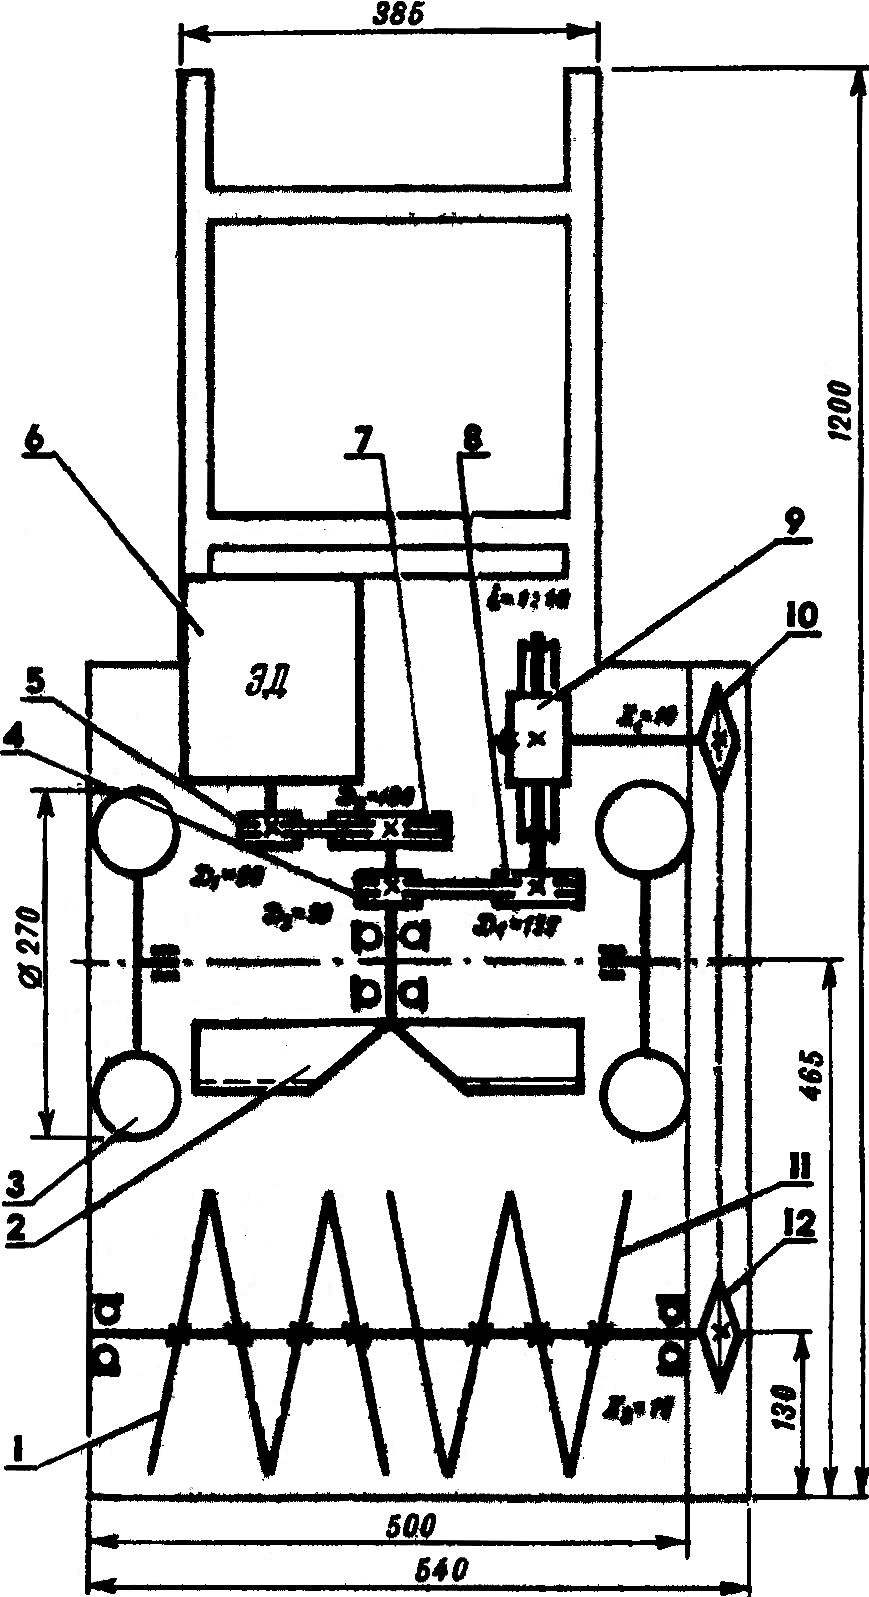 Kinematic diagram of the machine.